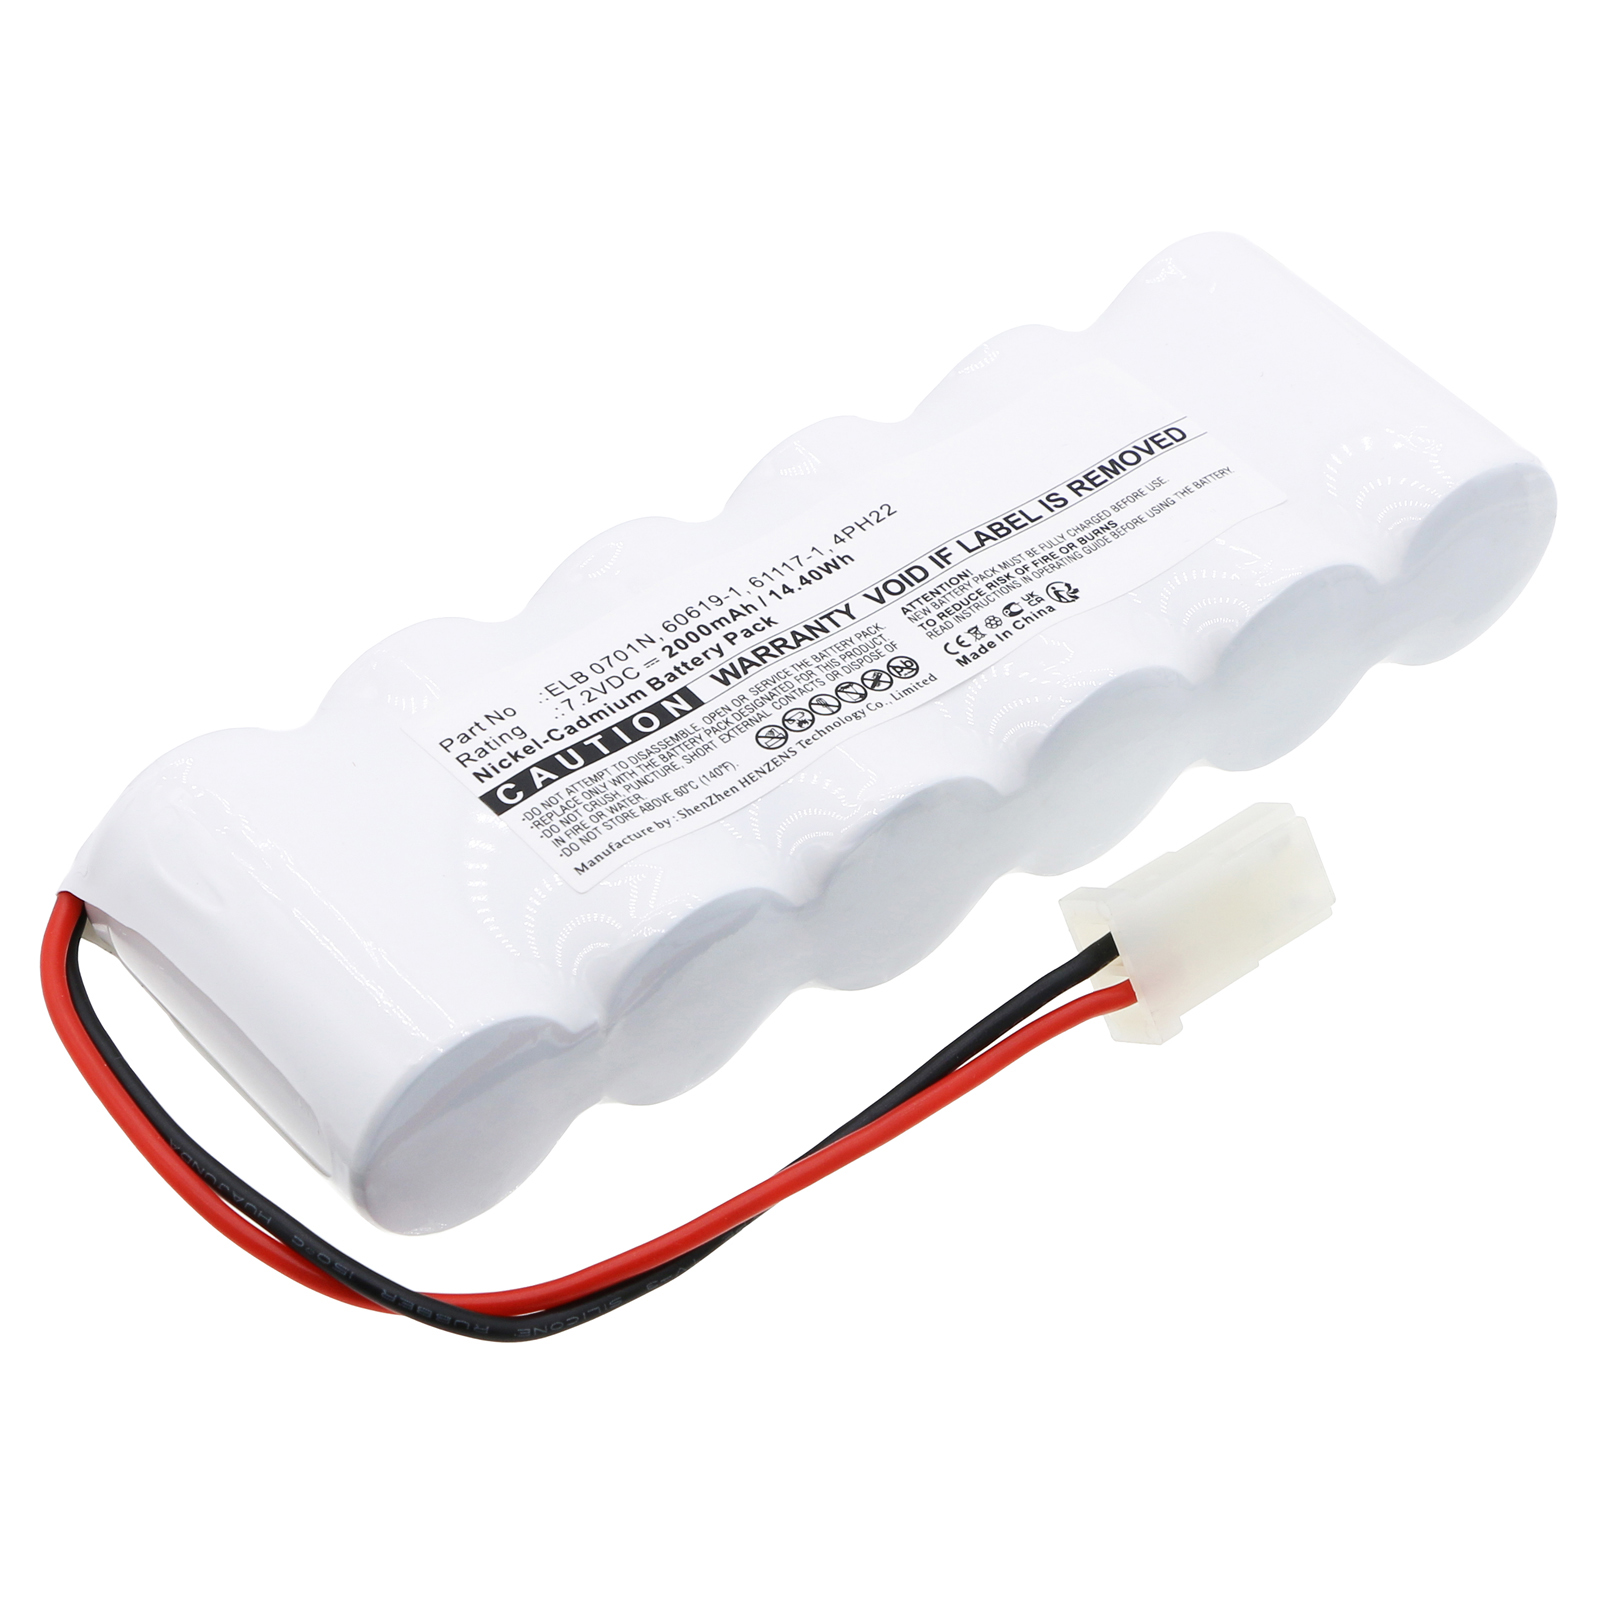 Synergy Digital Emergency Lighting Battery, Compatible with Lithonia 4PH22 Emergency Lighting Battery (Ni-CD, 7.2V, 2000mAh)